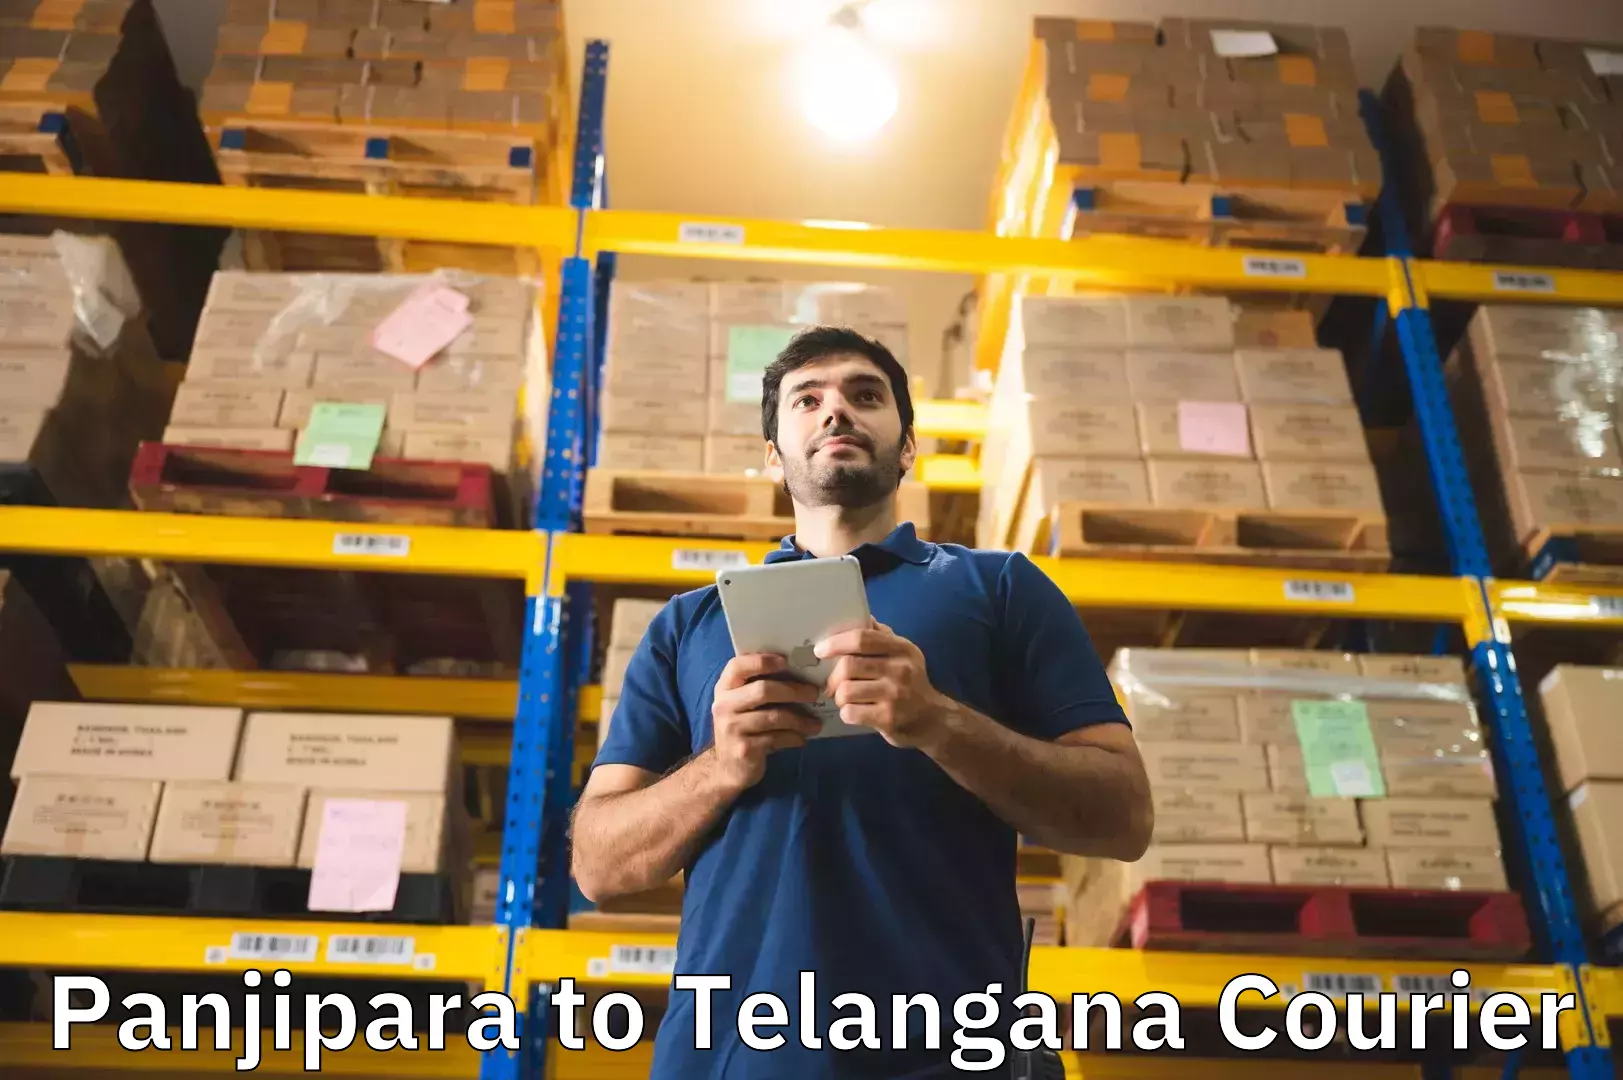 Baggage relocation service Panjipara to Telangana